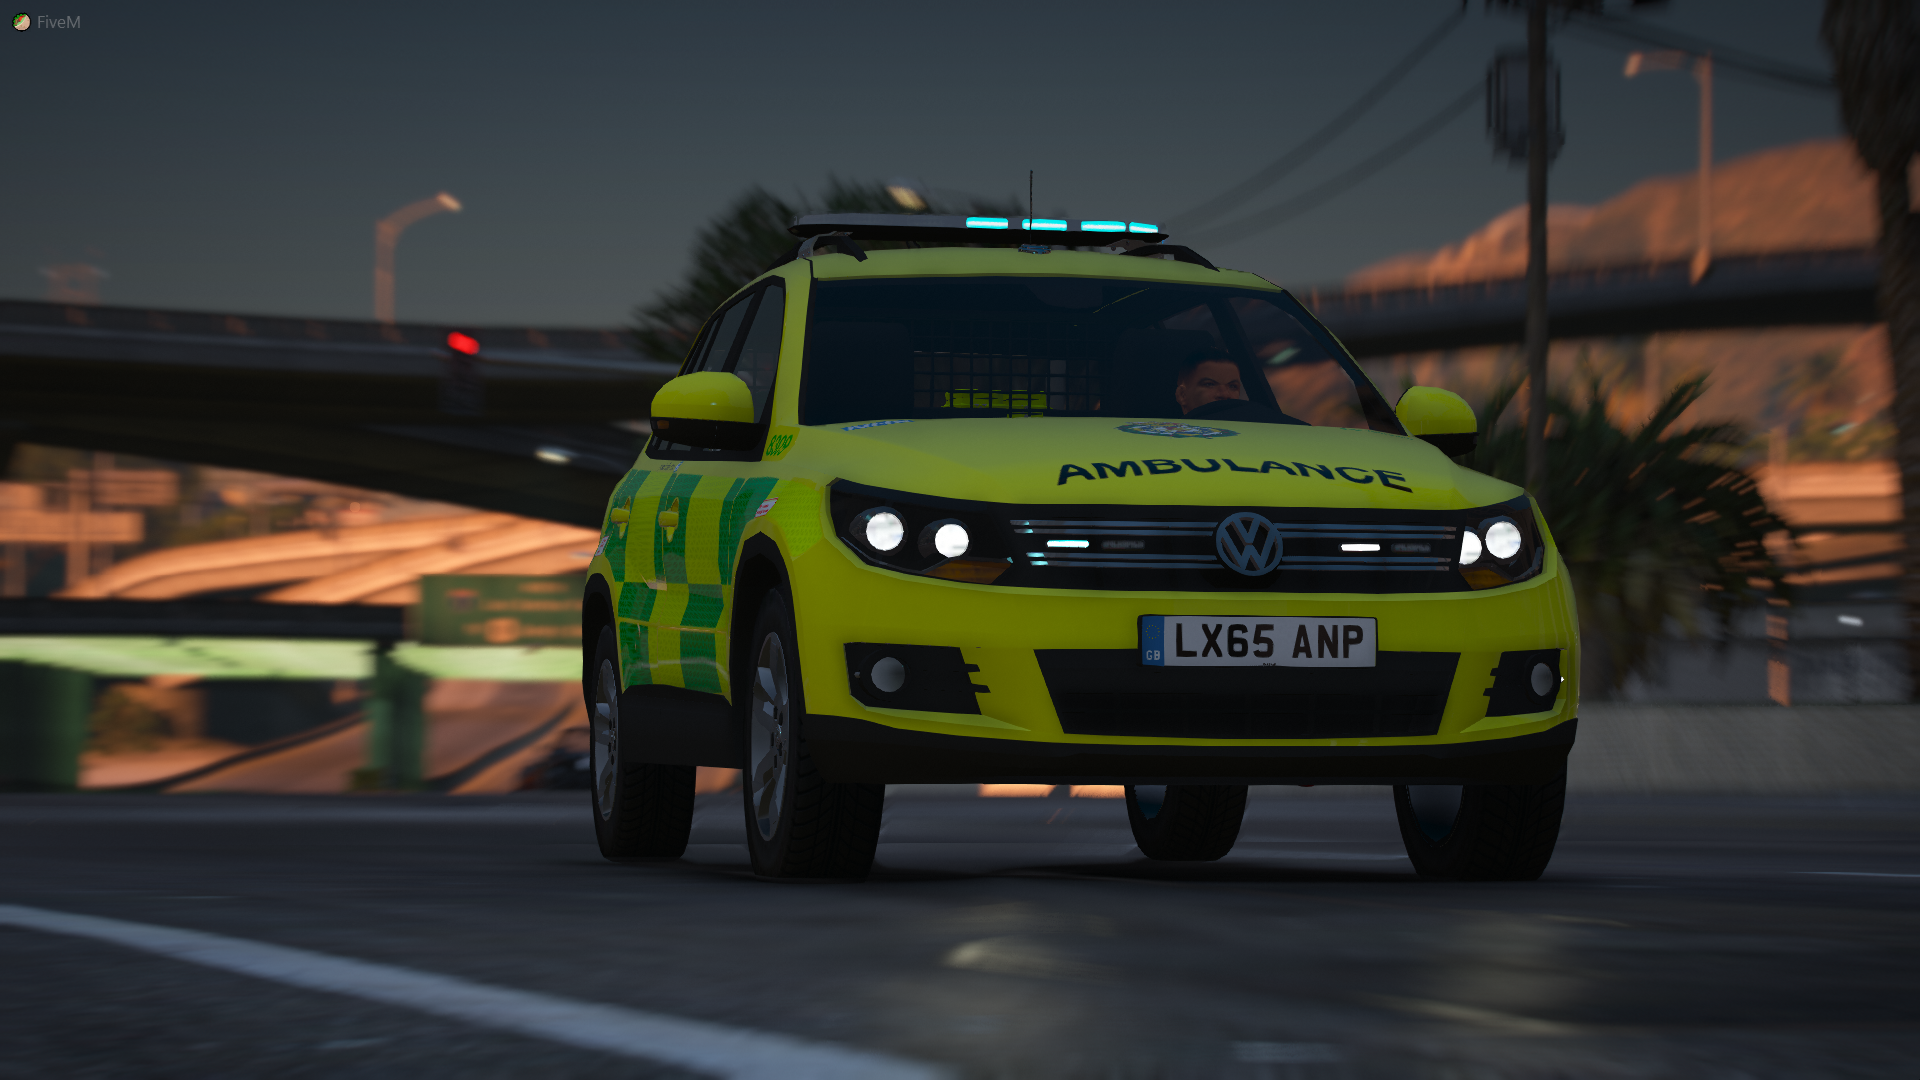 [ELS] 2015 London Ambulance Service VW Tiguan RRV GTA5